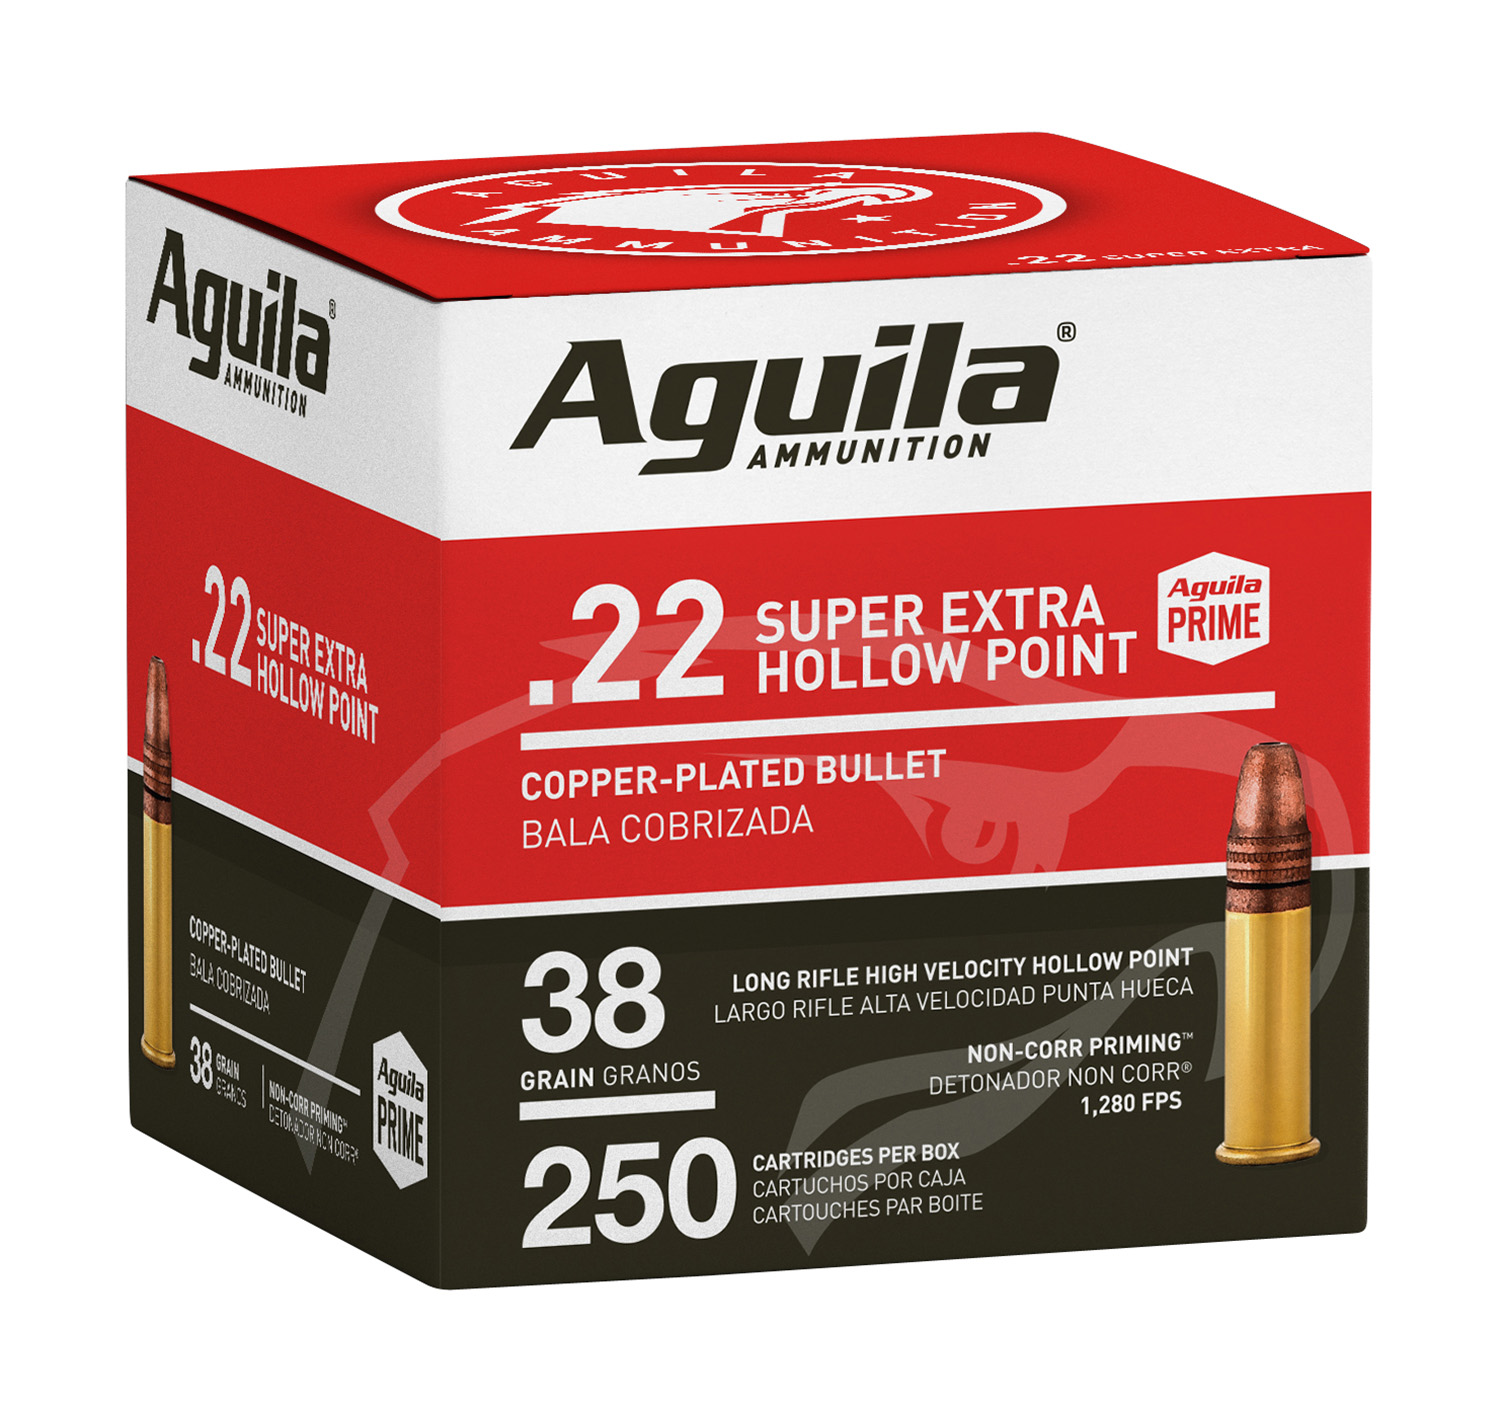 22 Long Rifle 38 Grain Hollow Point 250 Rounds Aguila Ammunition 22 Long Rifle